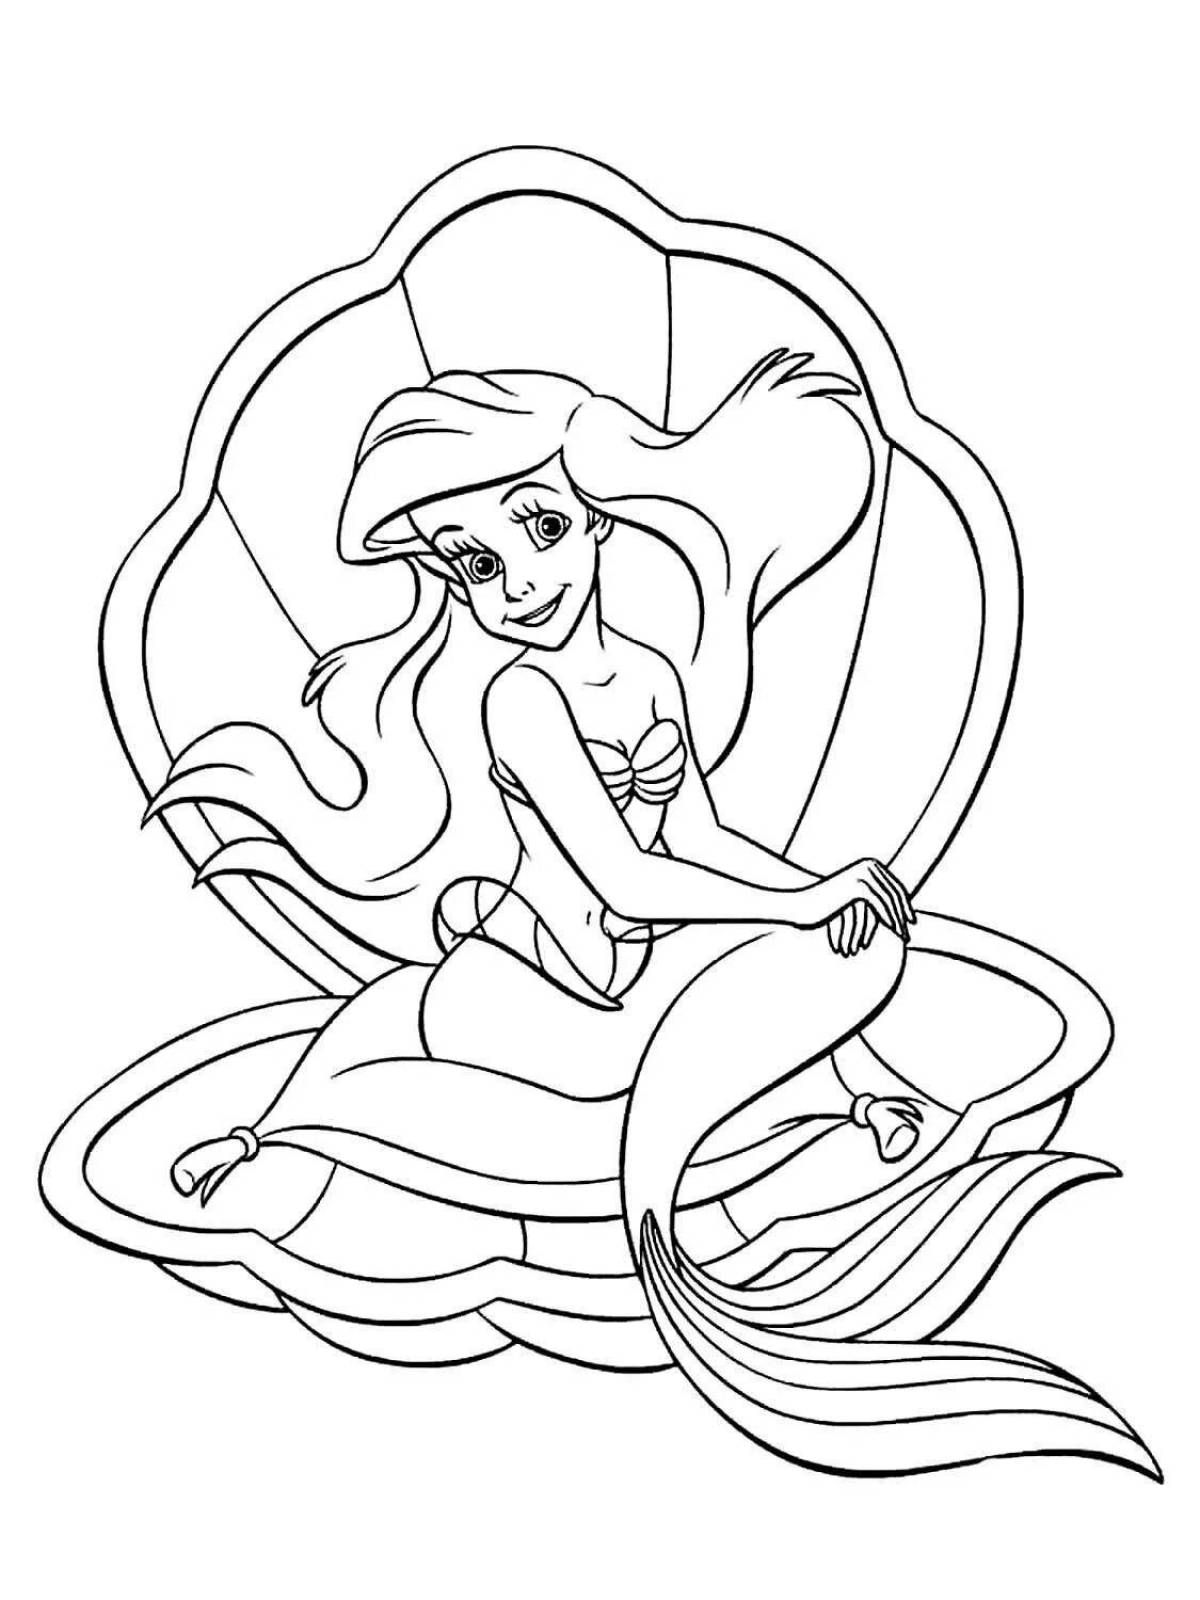 Wonderful coloring drawing of a mermaid